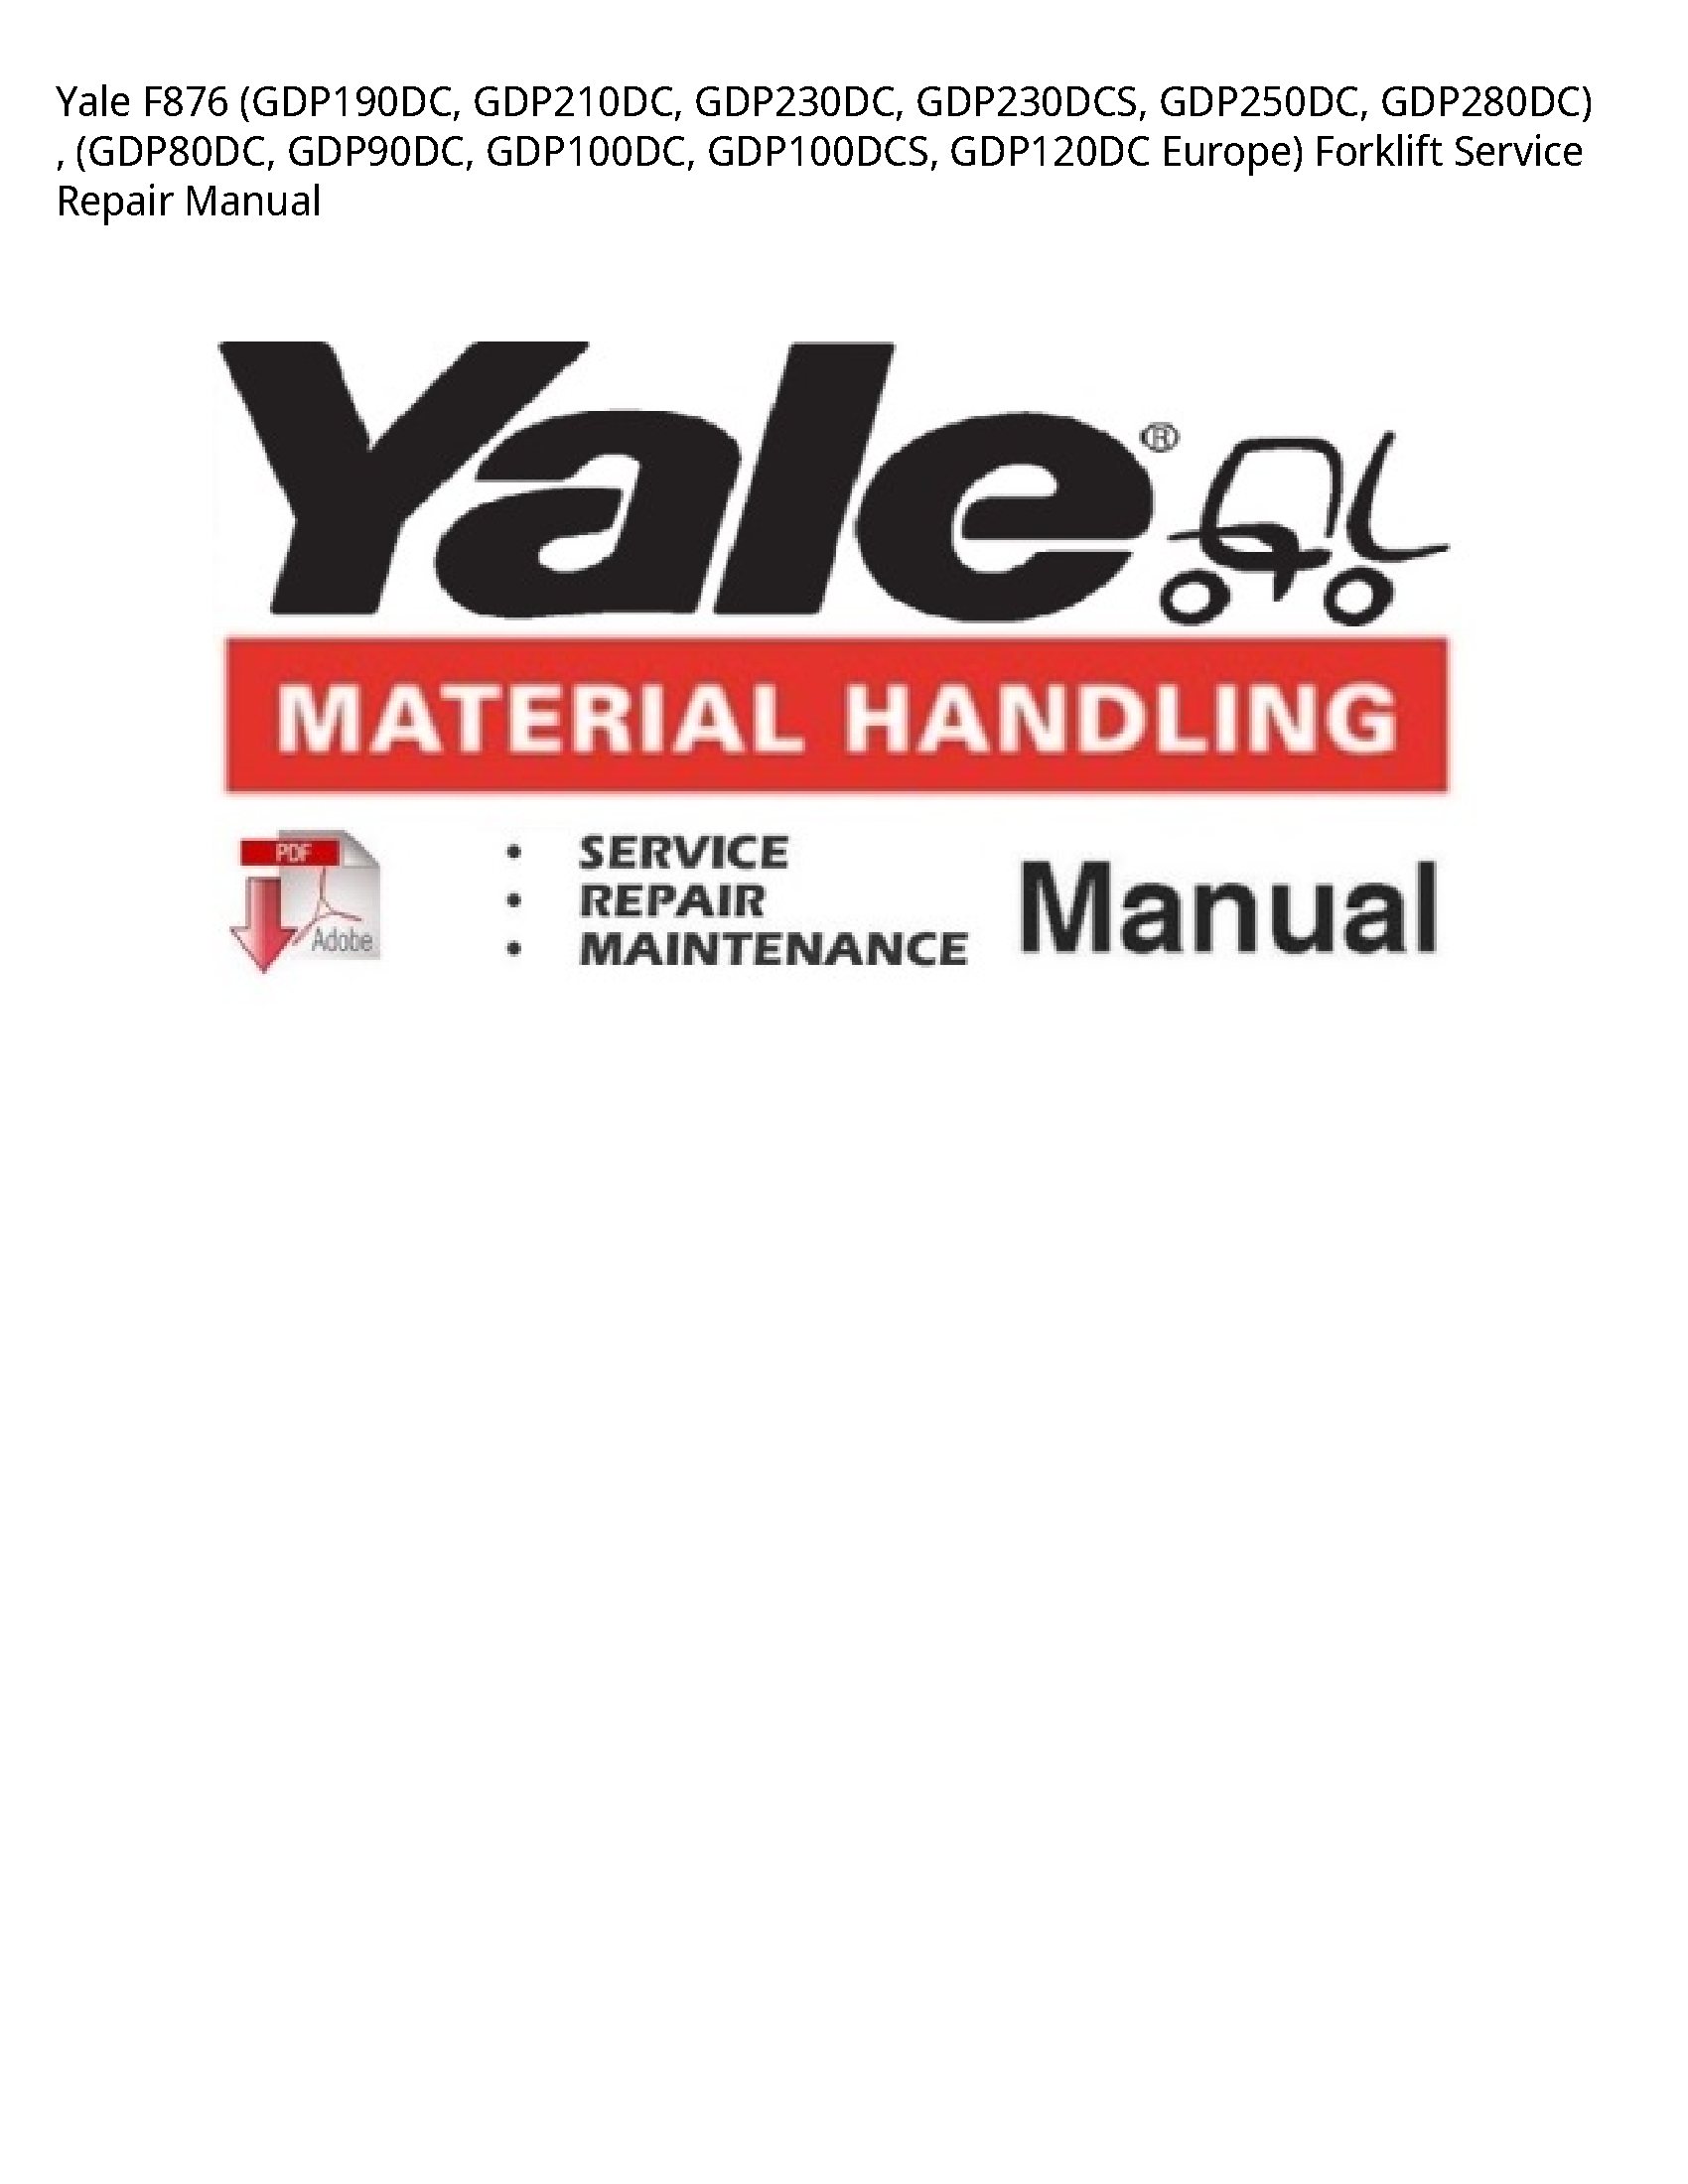 Yale F876 Europe) Forklift manual